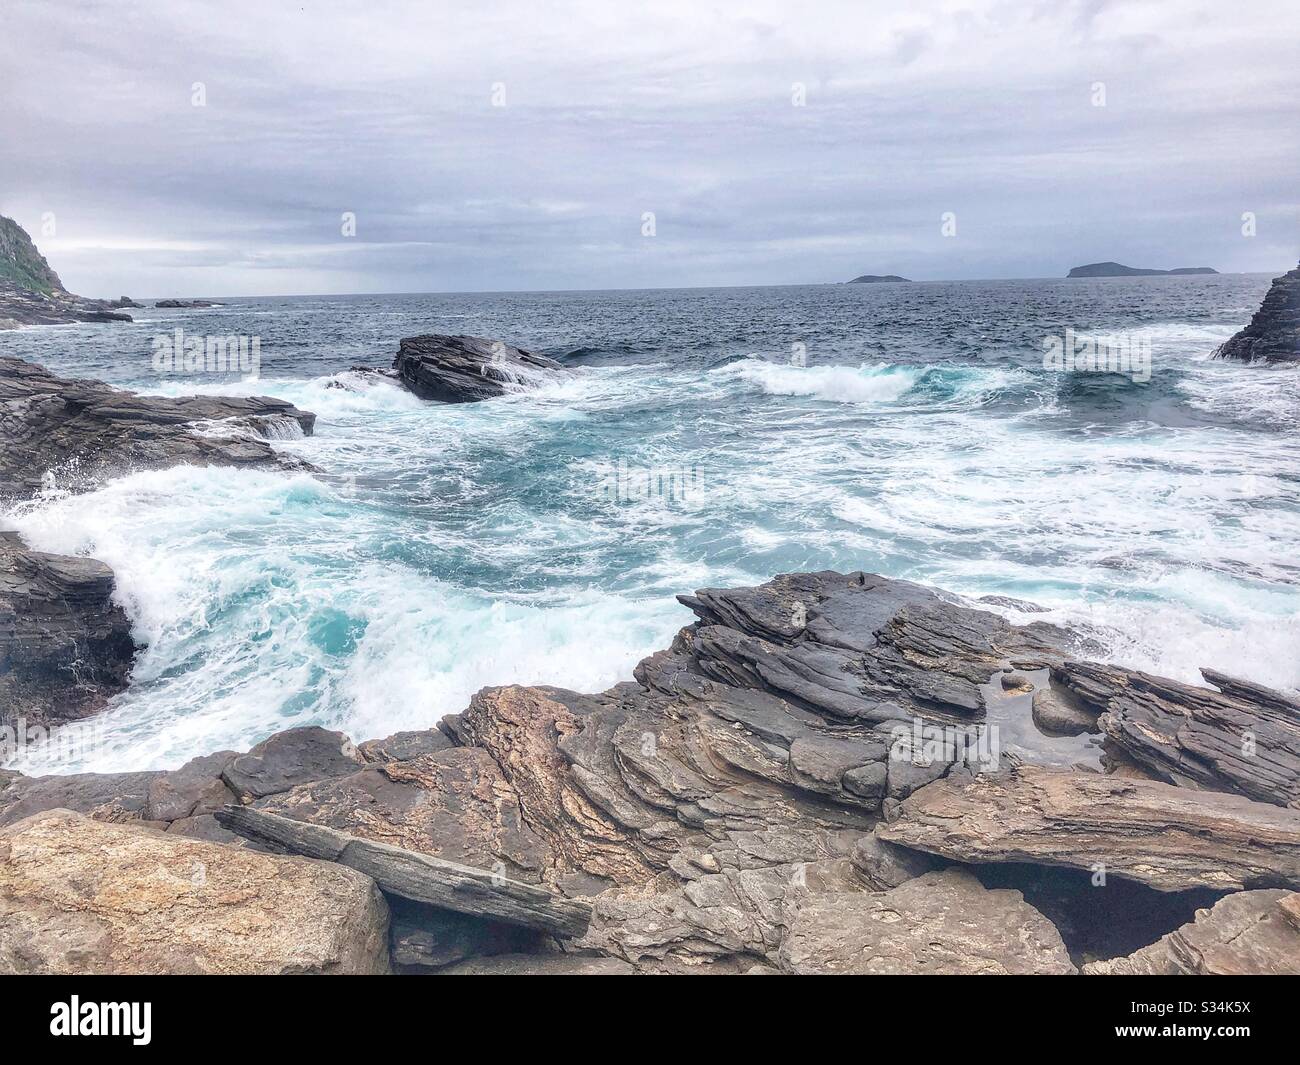 Rough sea on an overcast day. Stock Photo